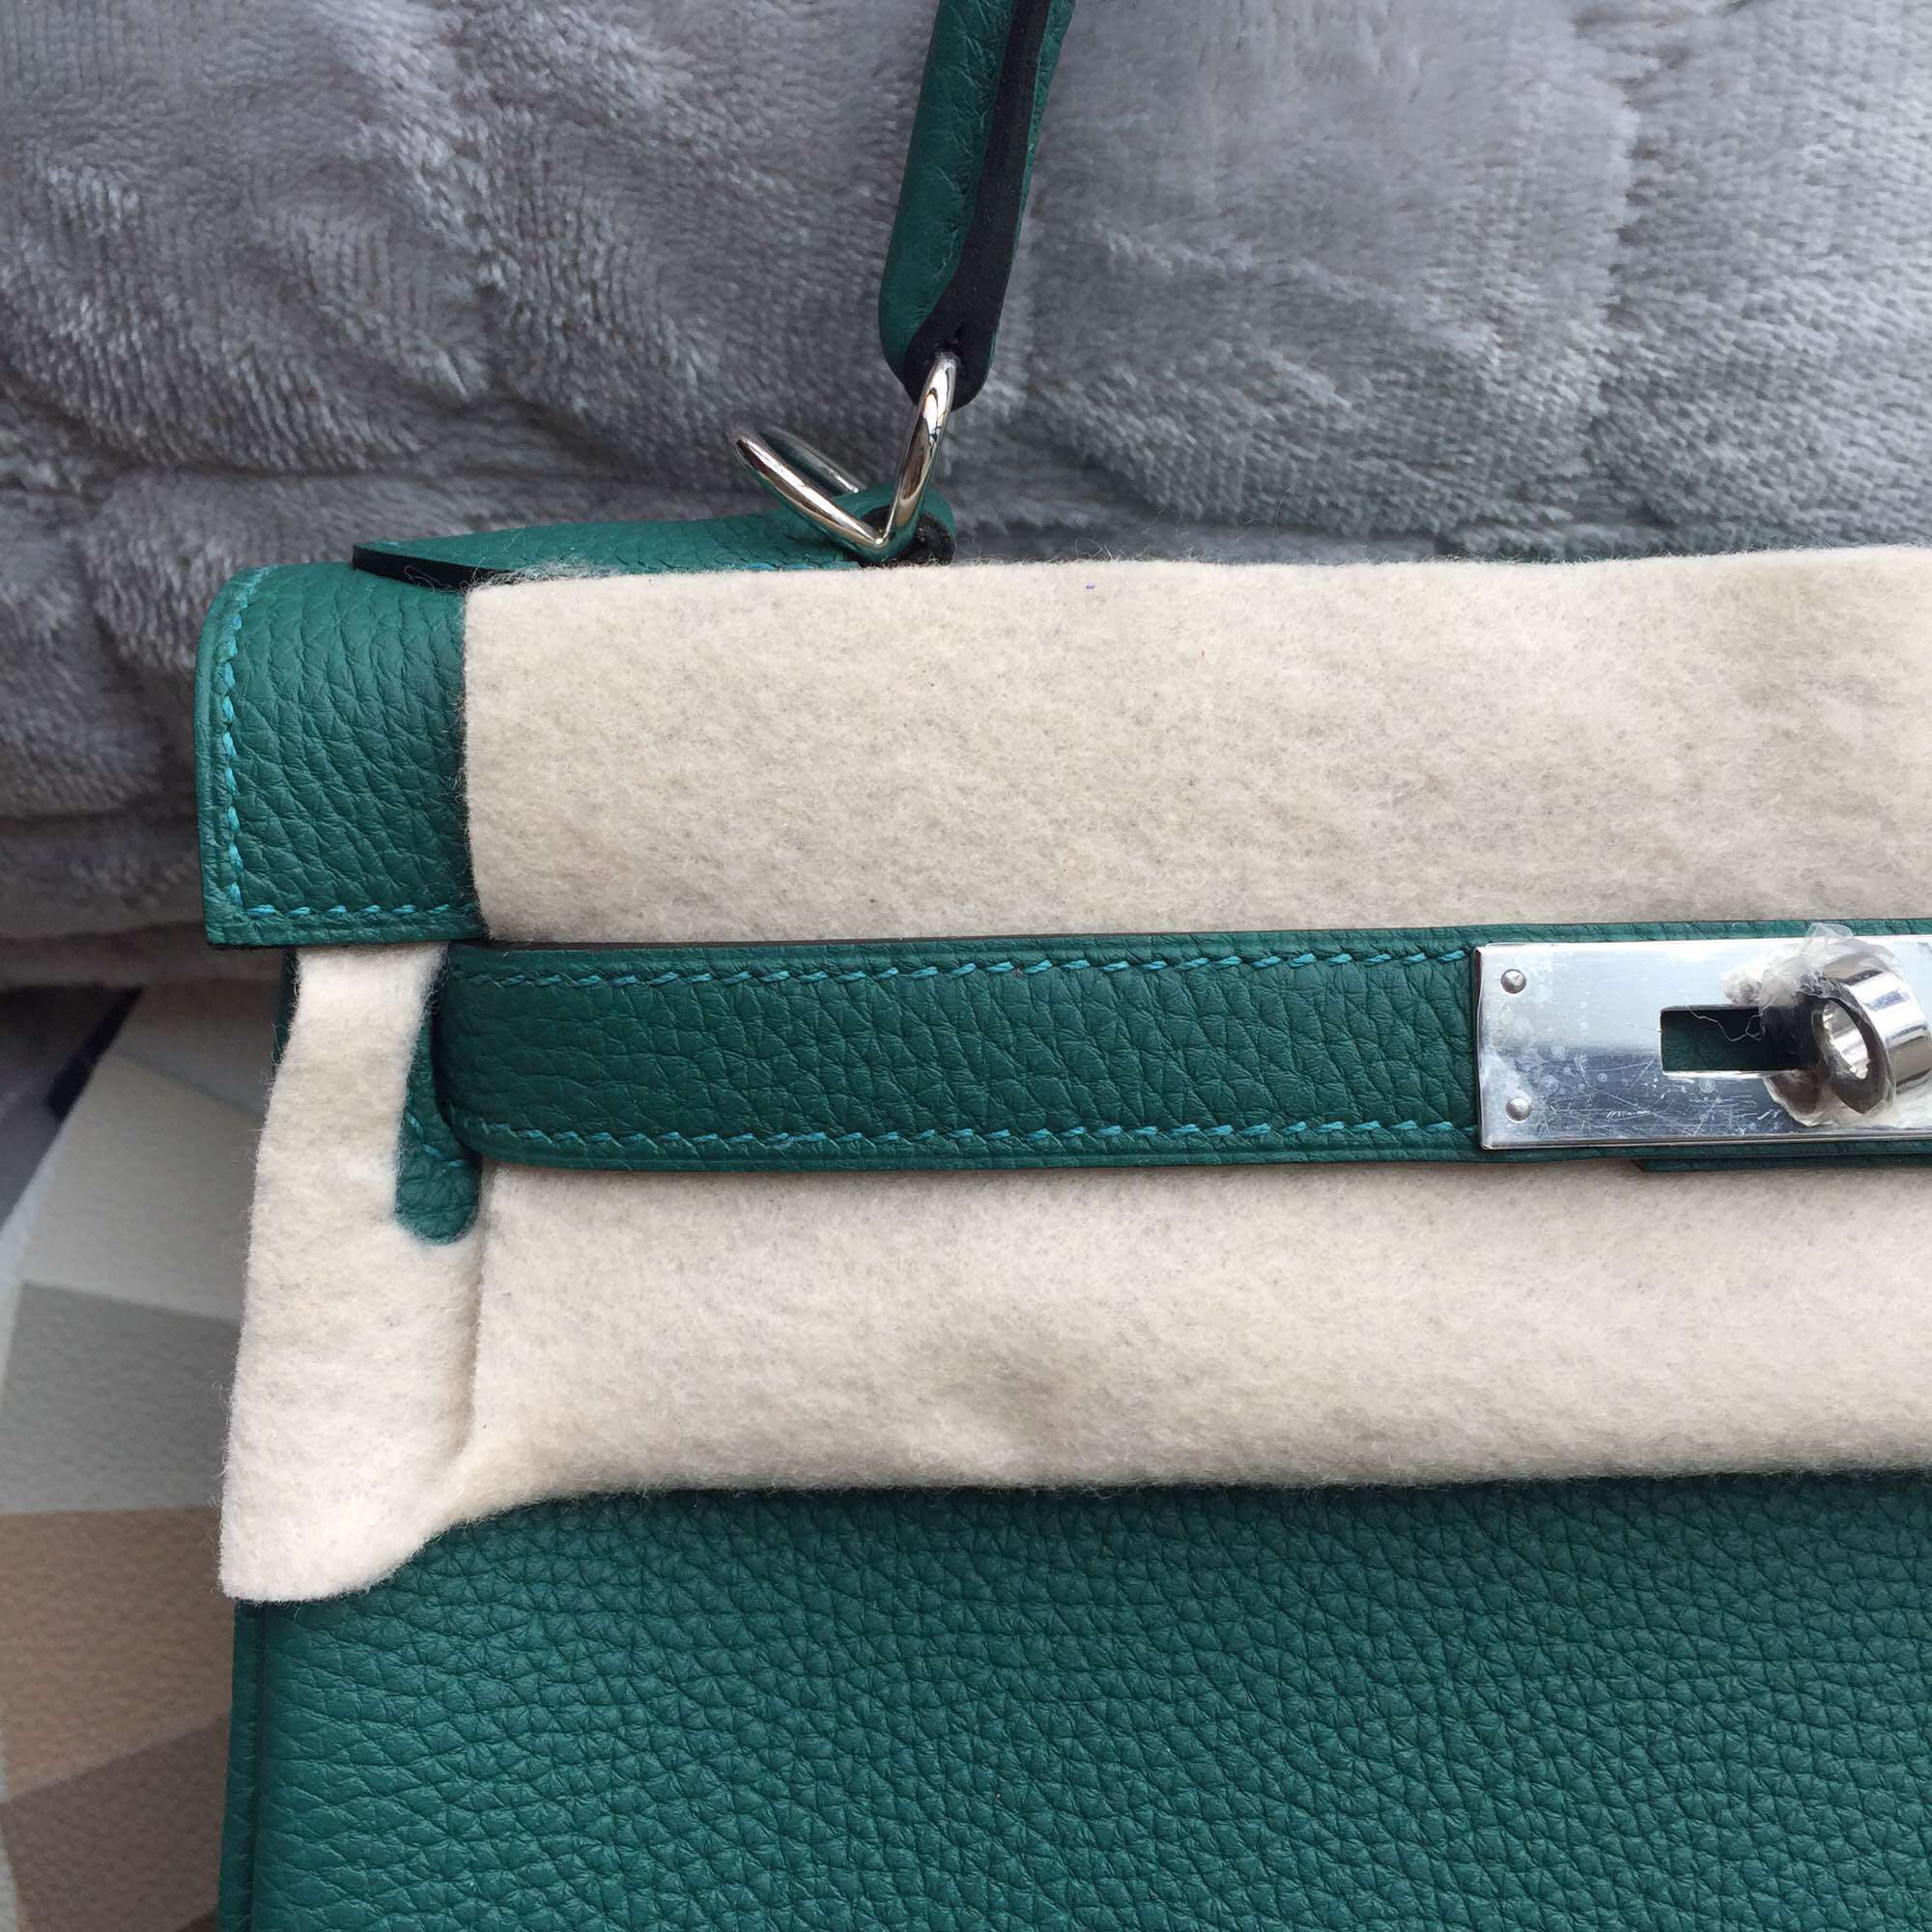 Wholesale Hermes Kelly Bag Retourne 28CM in Z6 Malachite Color Togo Leather